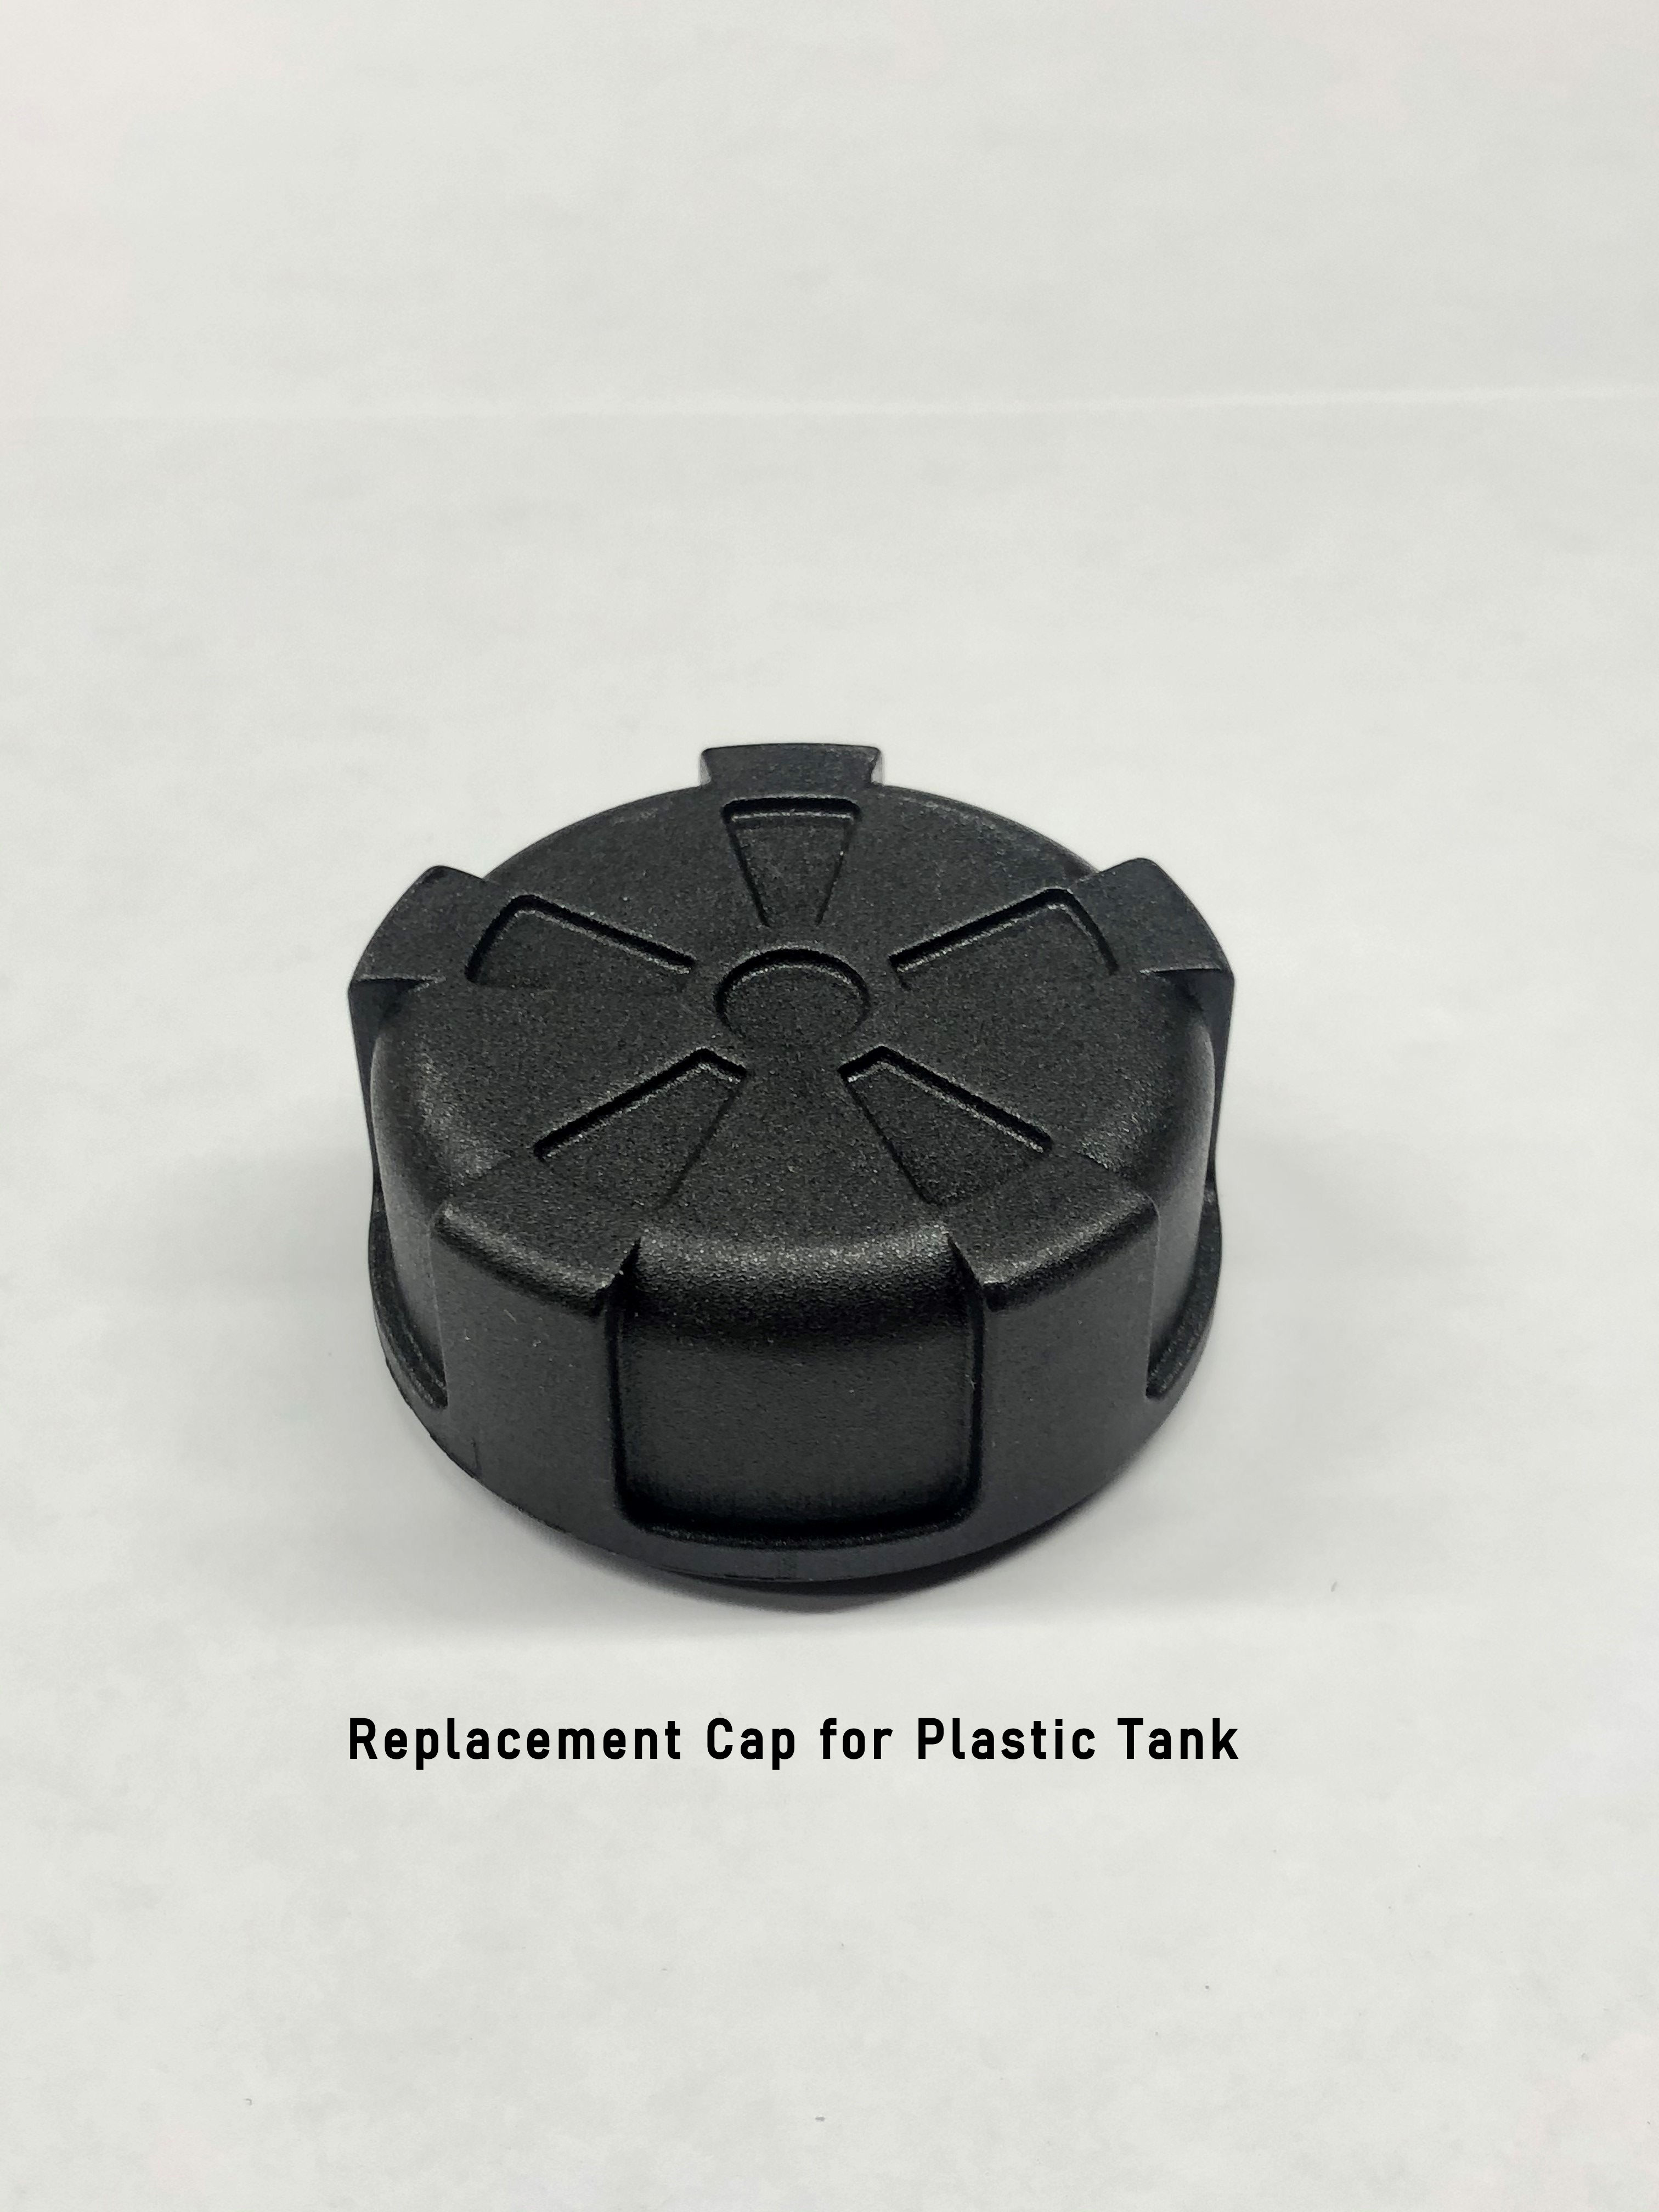 Fuel Tank - Caps for Plastic Tanks - Product Details